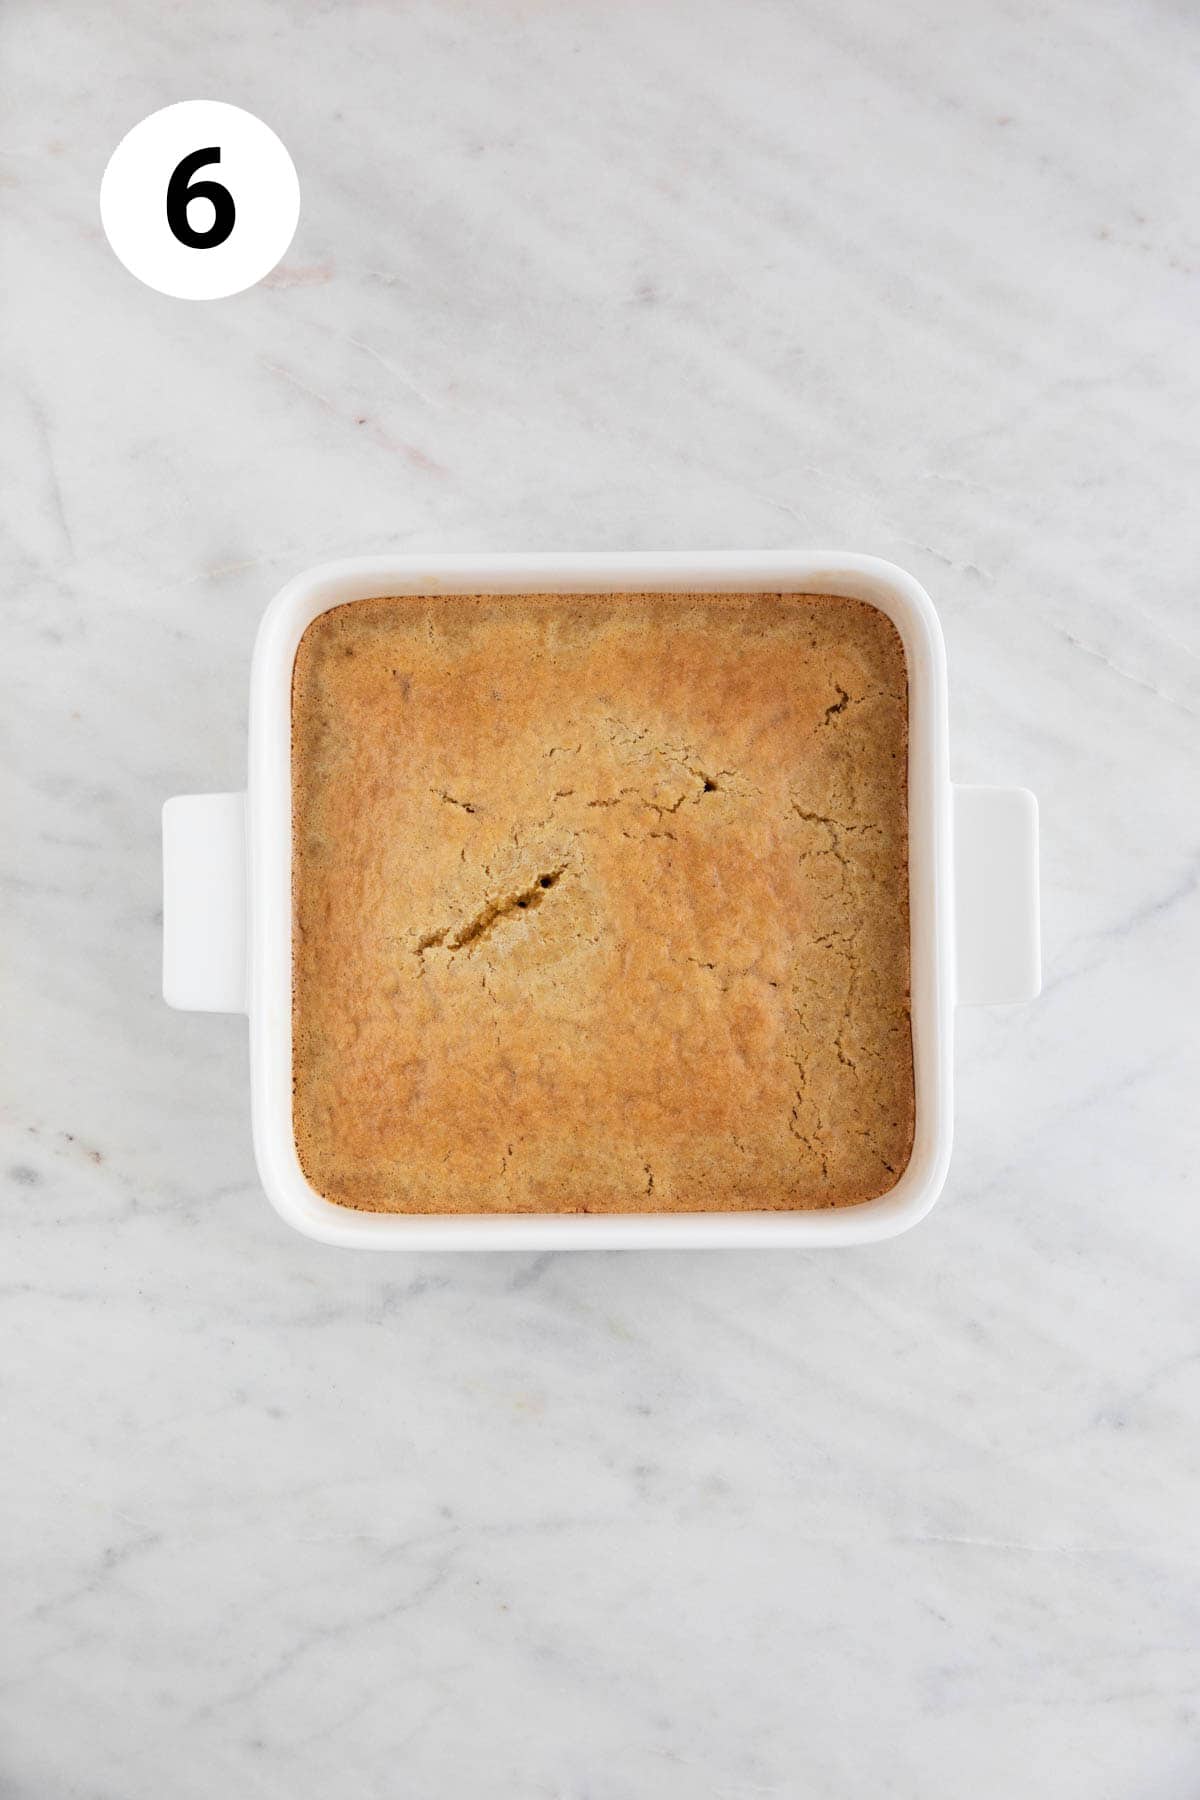 Baked vegan cornbread in a square baking dish.